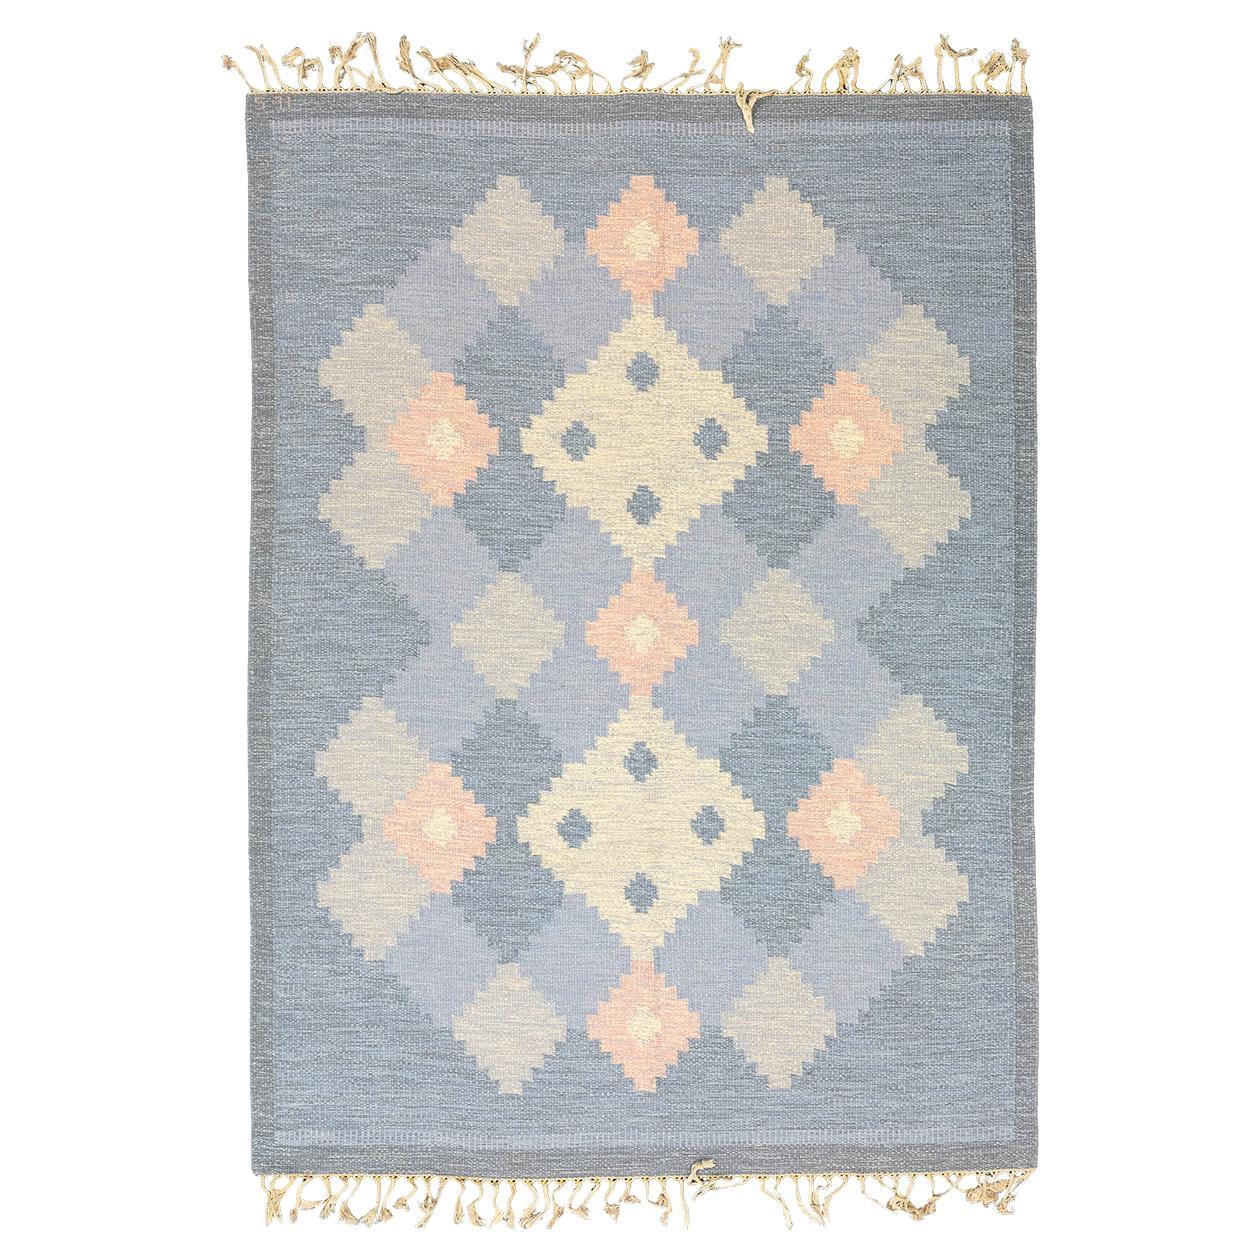 Scandinavian Carpet Rollakan Swedish Abstract Design Soft Color Palette